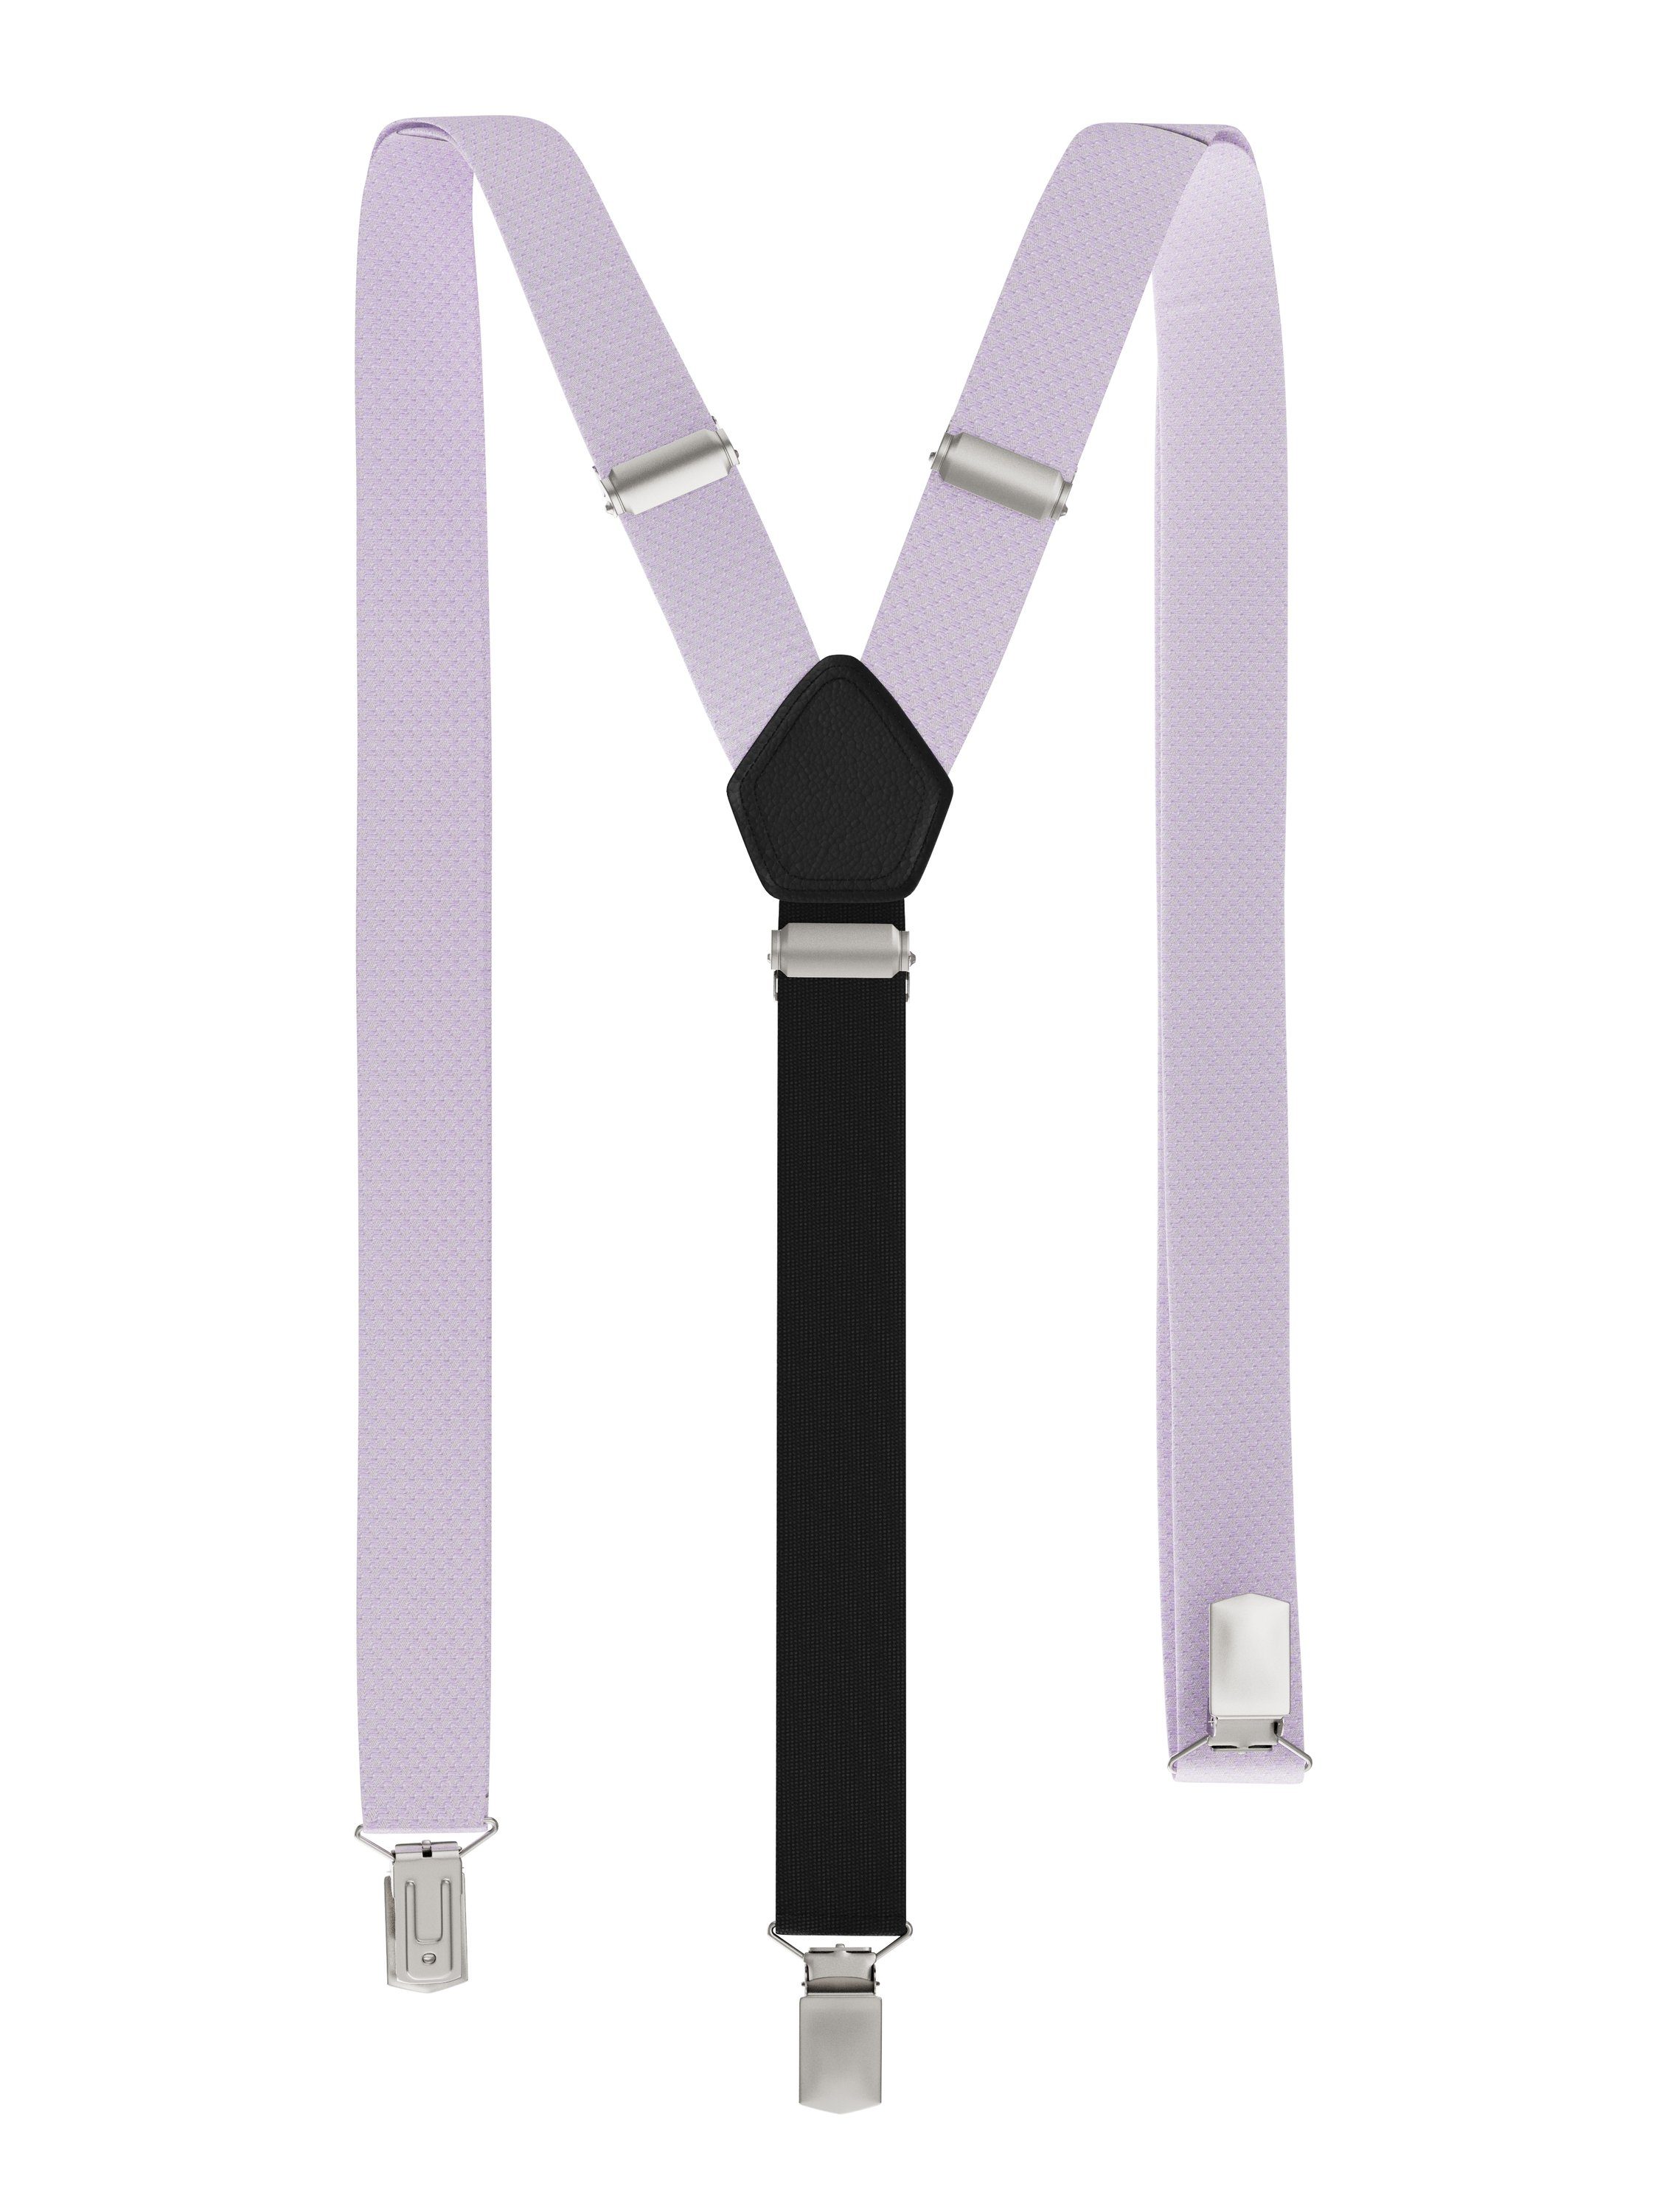 Super beliebt, hohe Qualität garantiert OLYMP Krawatte flieder